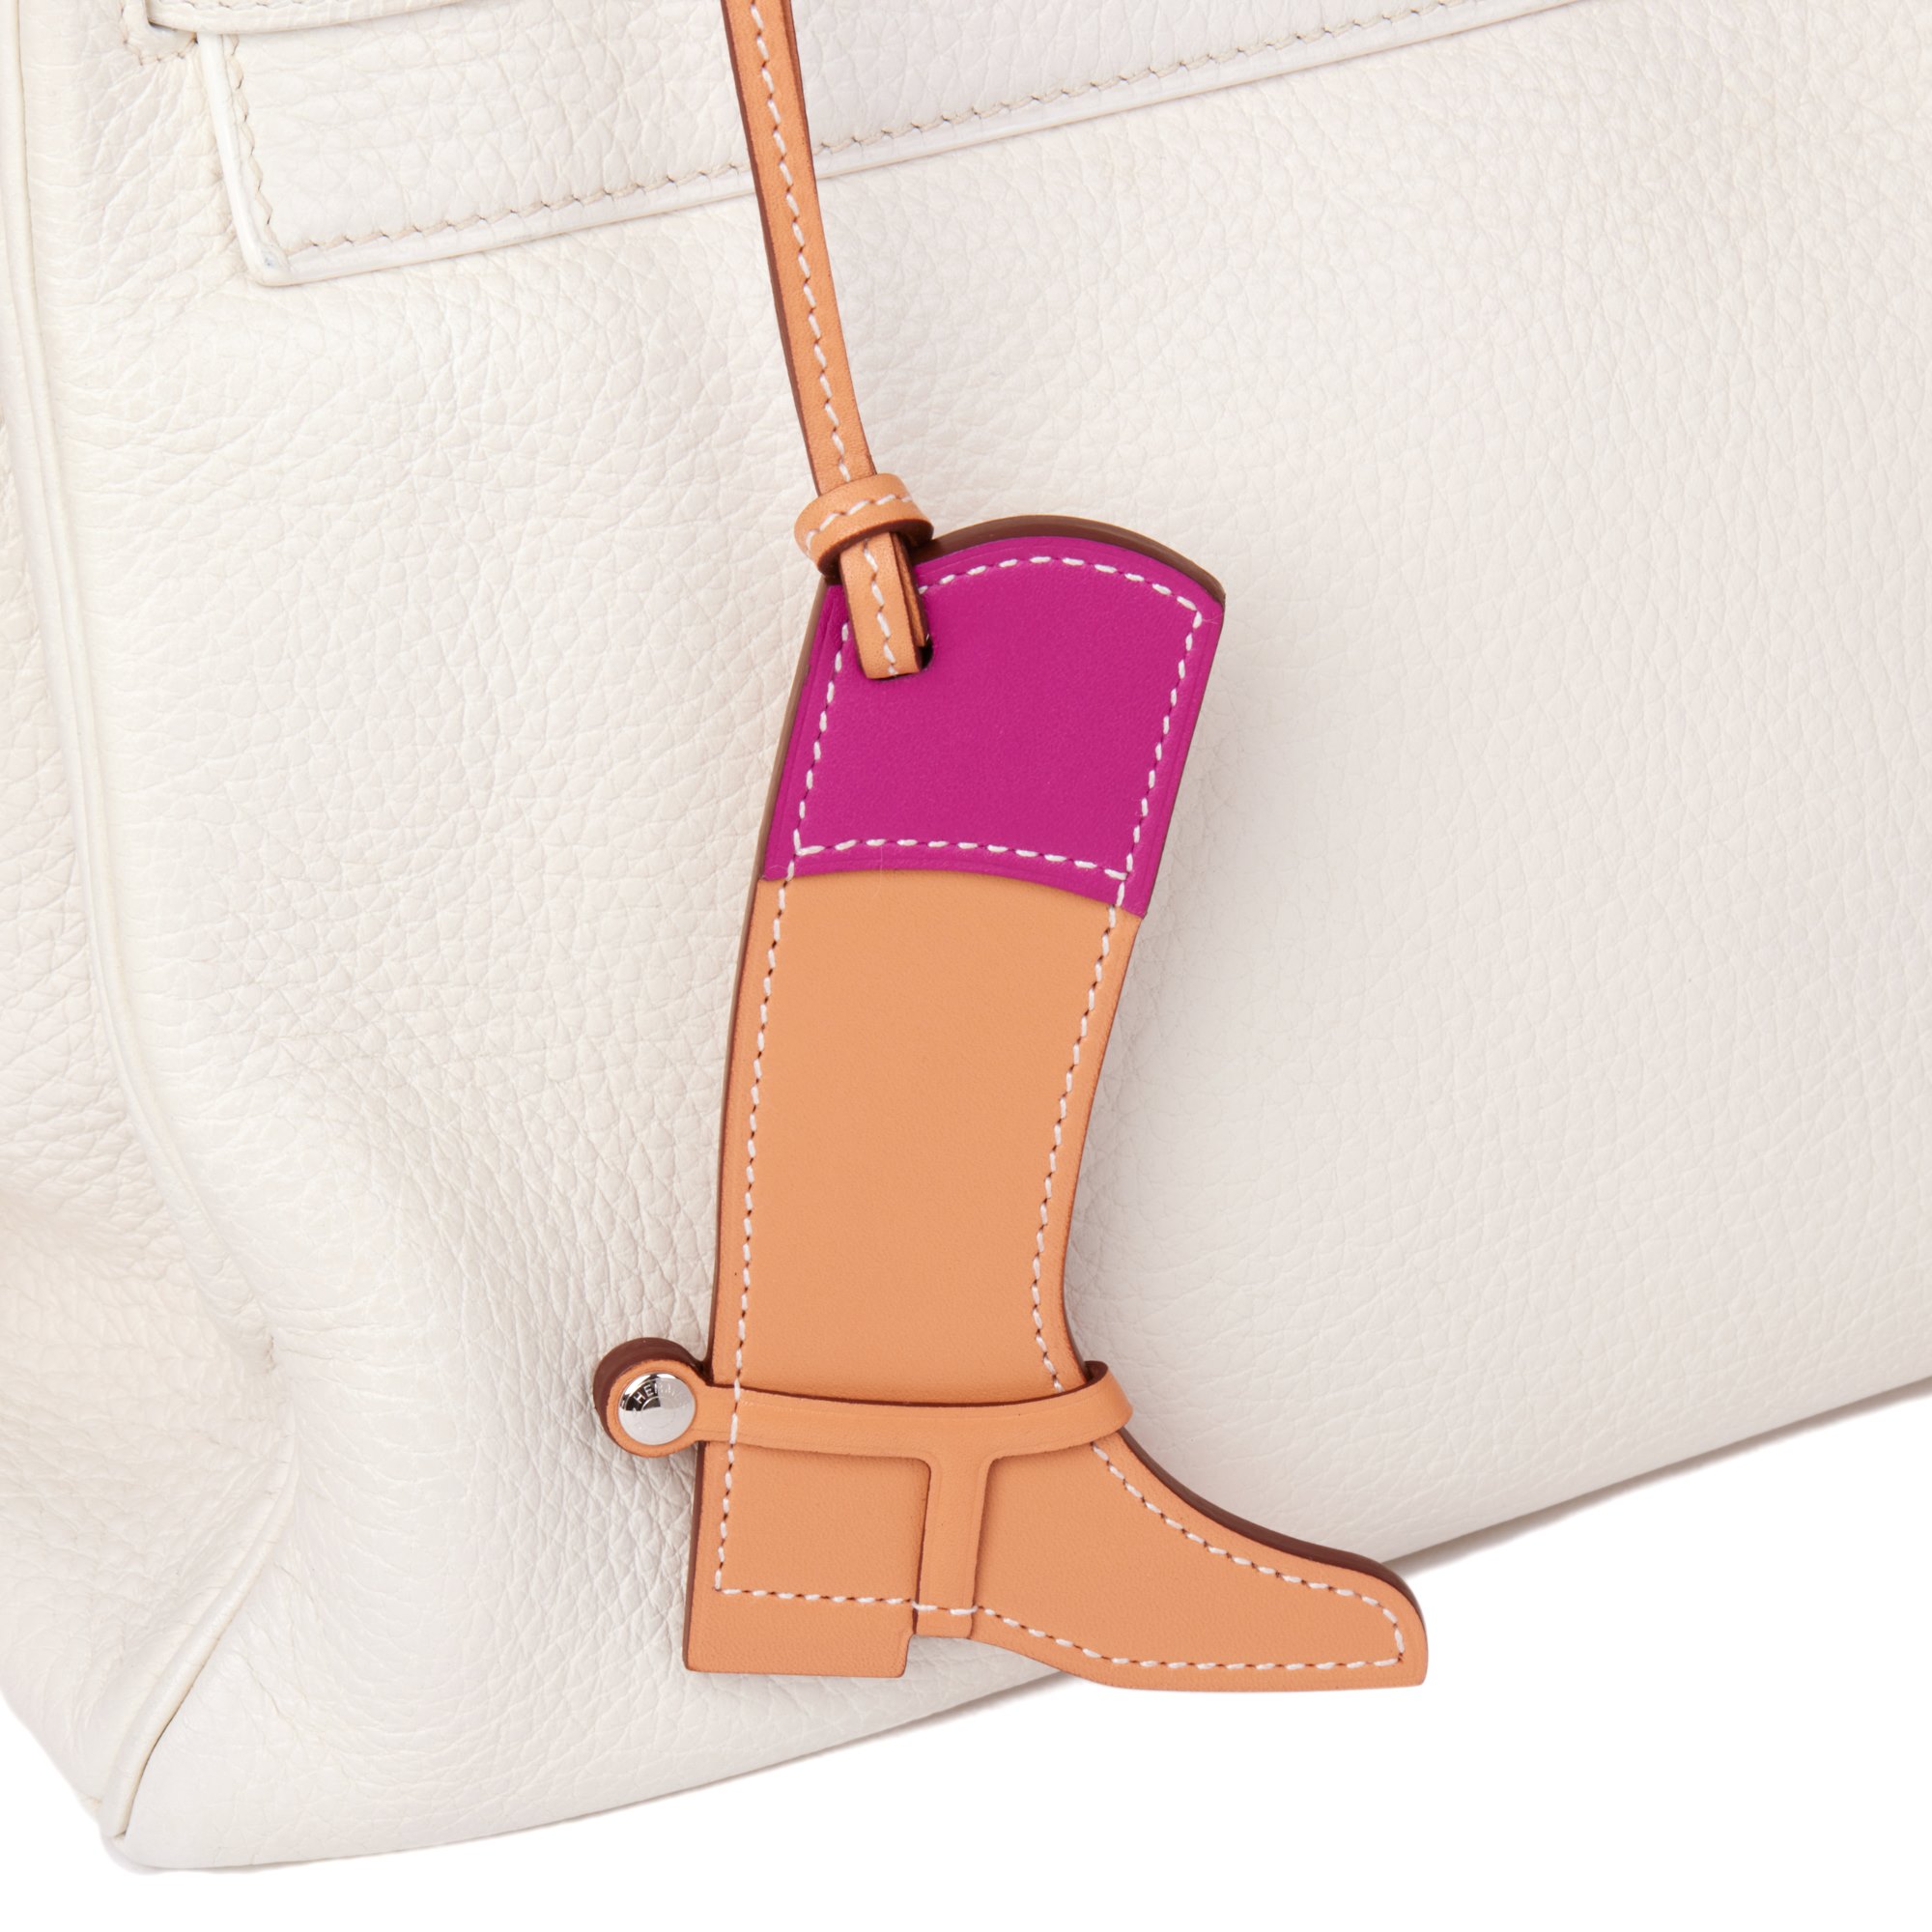 Hermès Terre Cuite, Rose Purple Butler & Swift Calfskin Leather Paddock Boot Charm